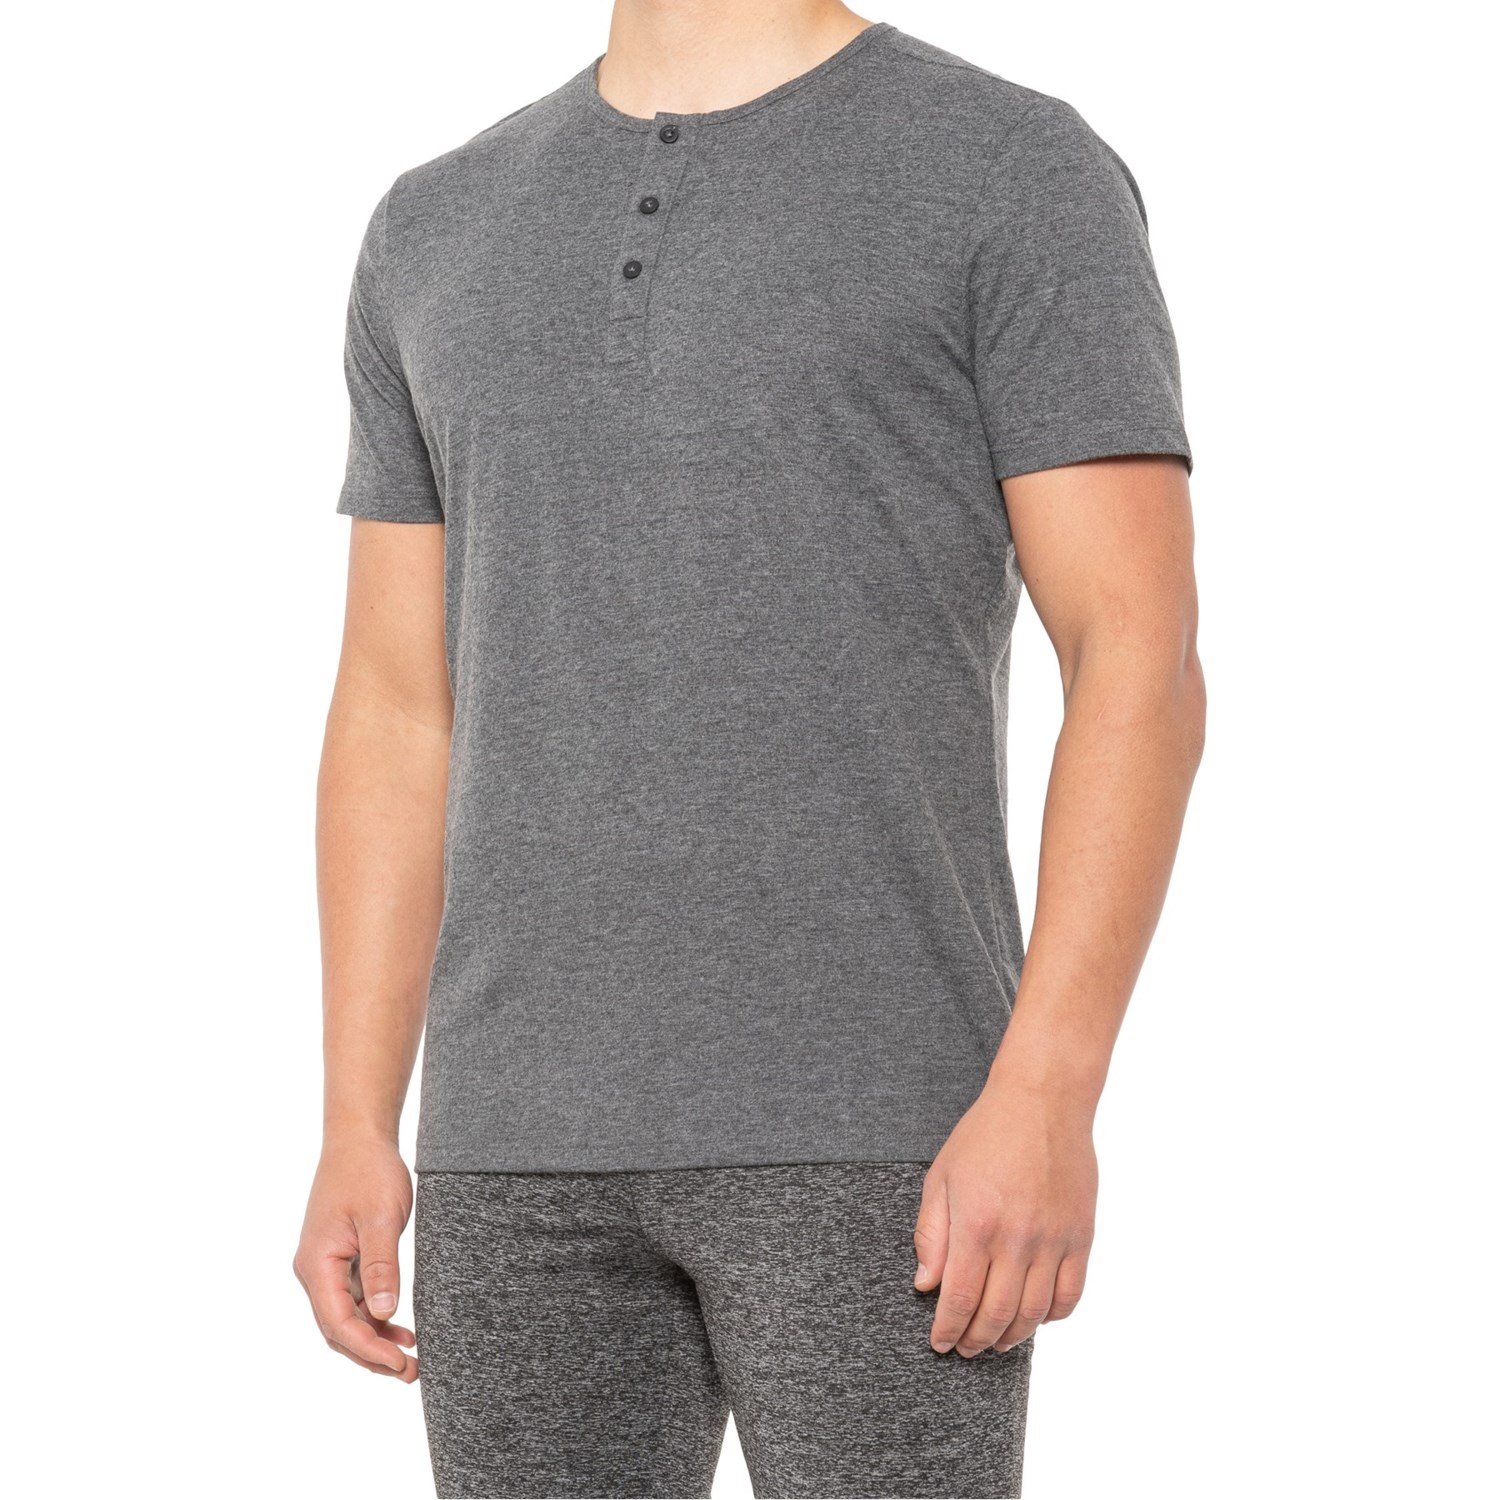 Kyodan Outdoor Tech Henley Shirt (For Men) - Save 48%